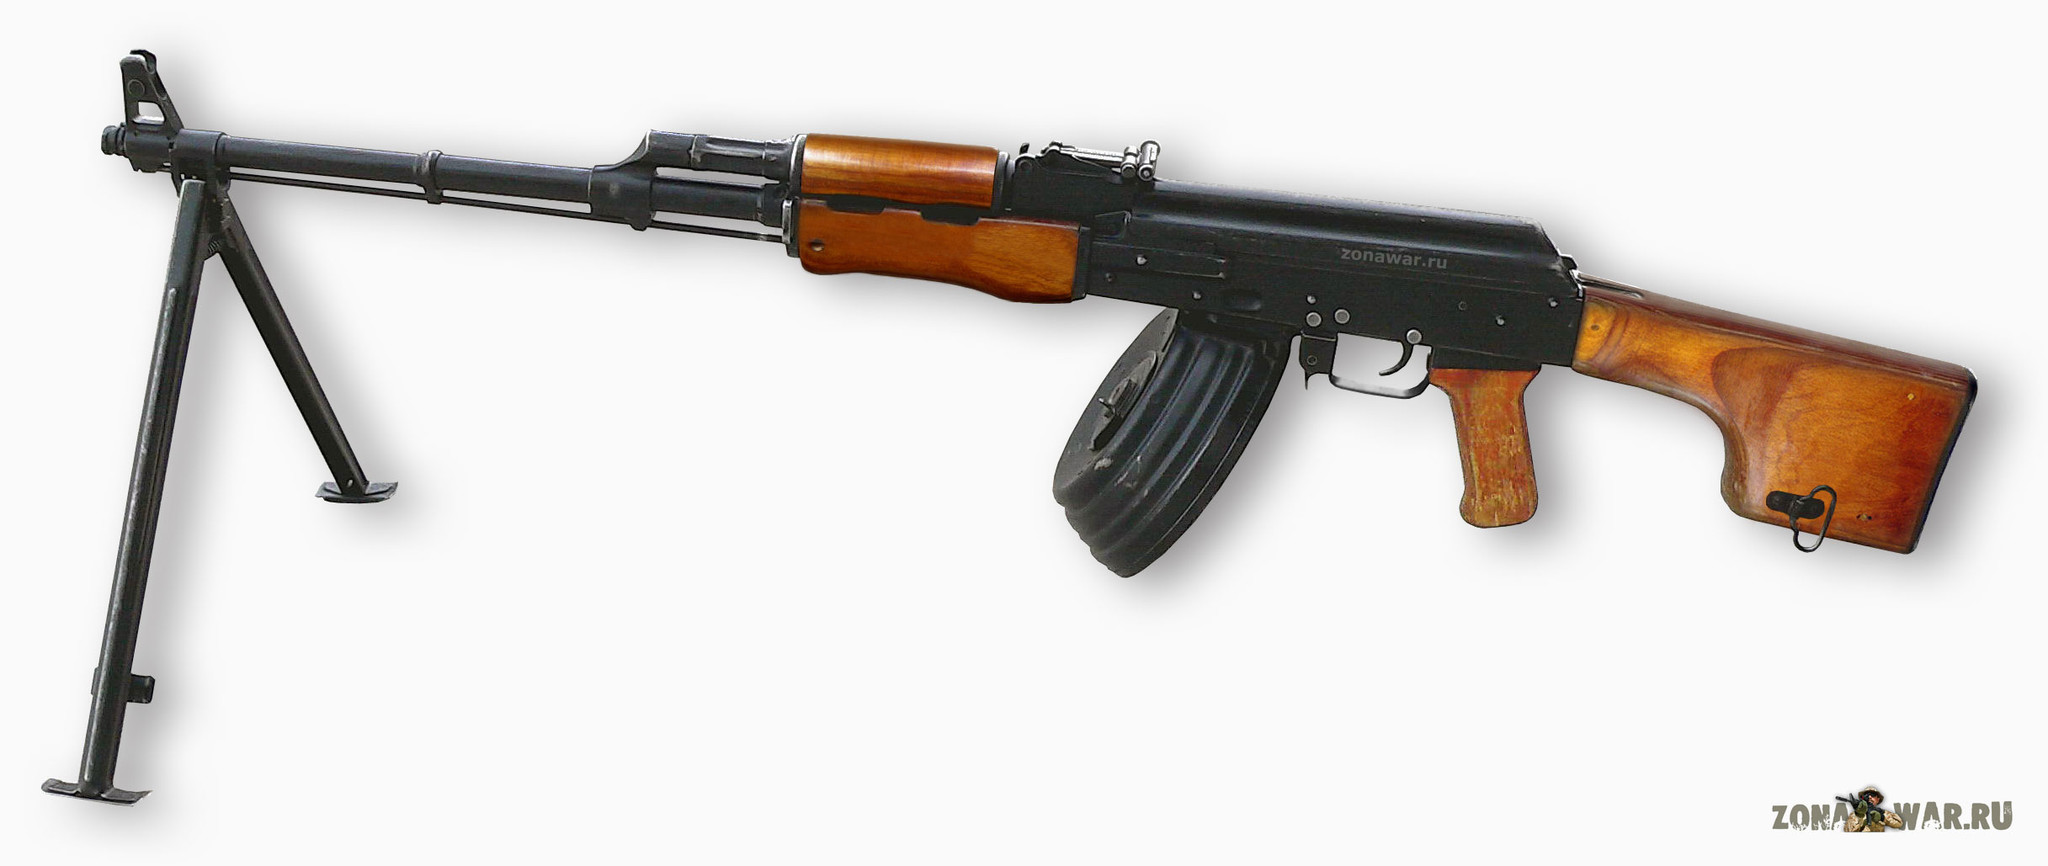 RPK Kalashnikov light machine gun